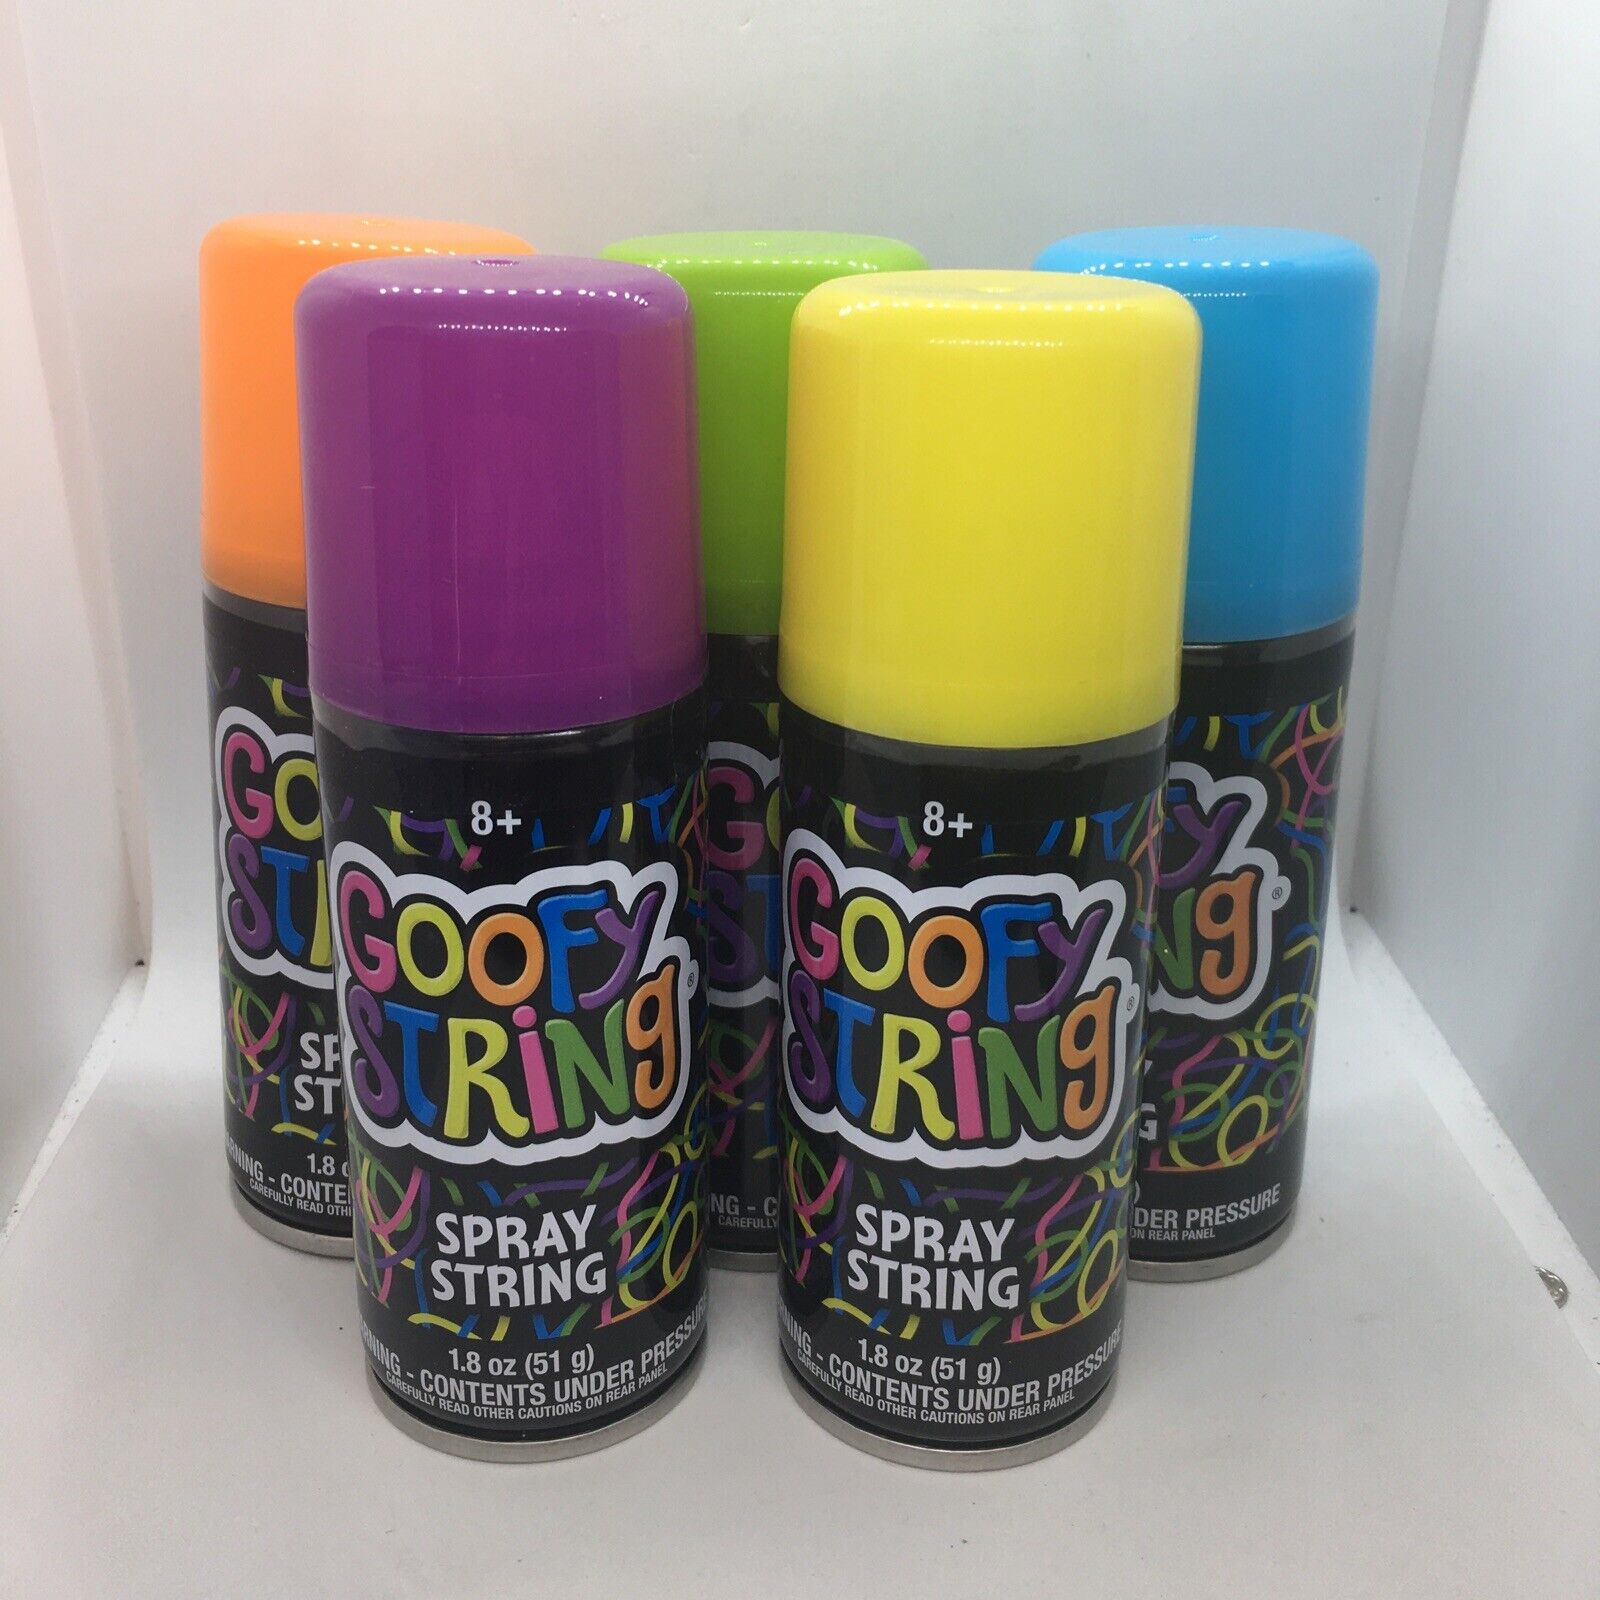 Goofy String Streamer Spray 1.8oz Each Choose Color